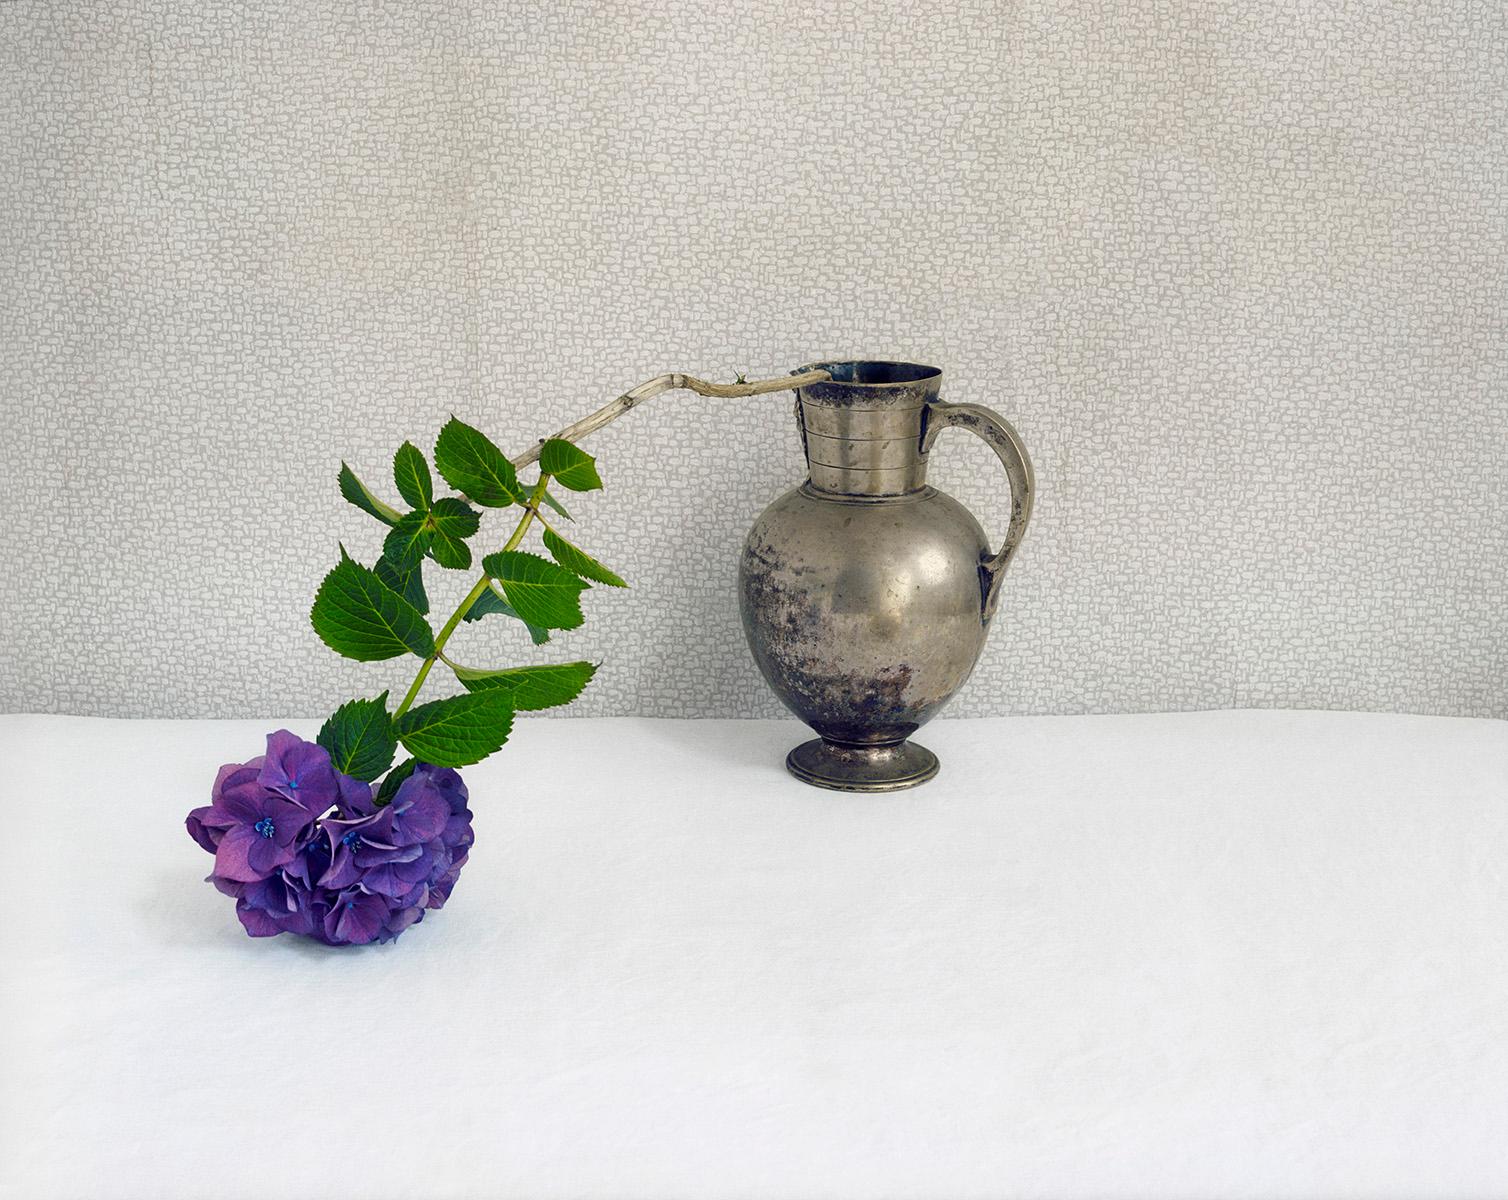 David Halliday Still-Life Photograph - Purple Hydrangea (Contemporary Still Life Photography of Flower in Silver Vase)